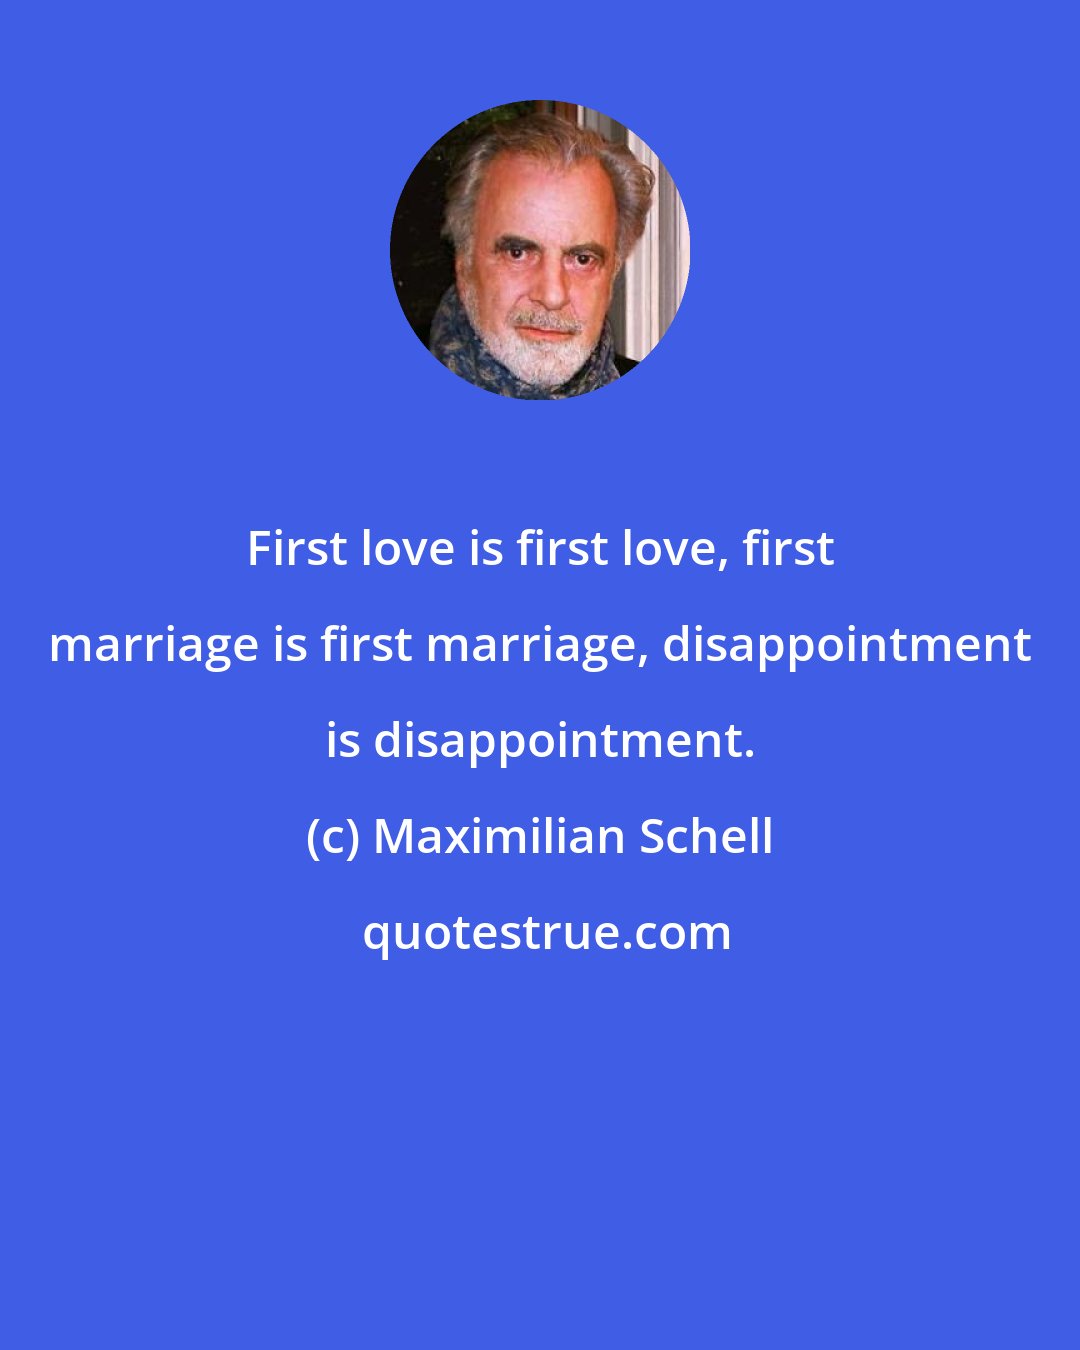 Maximilian Schell: First love is first love, first marriage is first marriage, disappointment is disappointment.